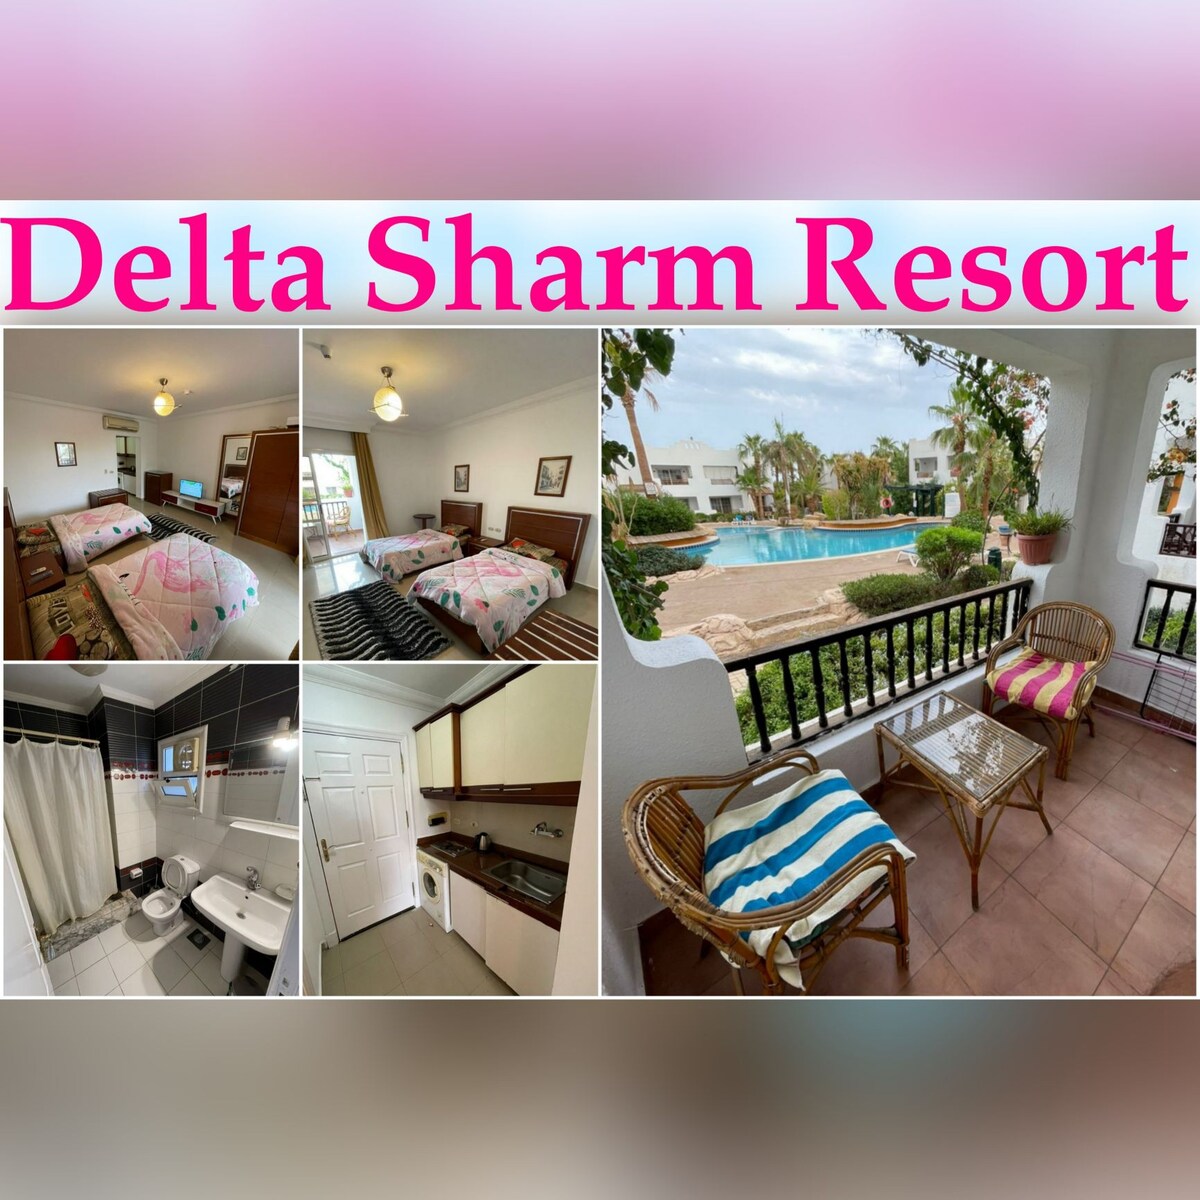 Beautiful Pool View Studio in Delta Sharm Resort.